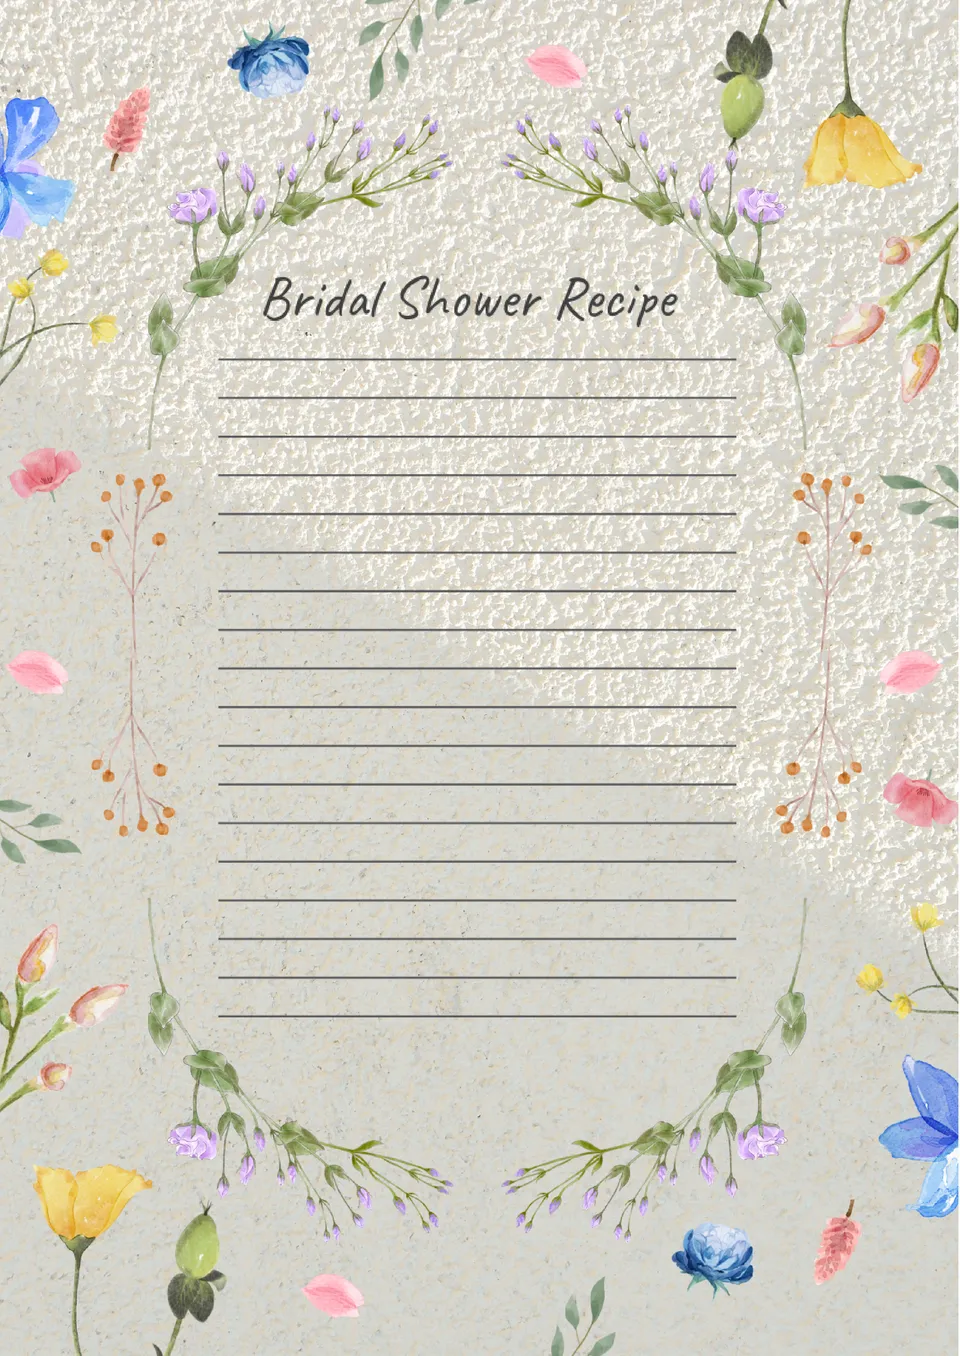 Bridal Shower Recipe Template